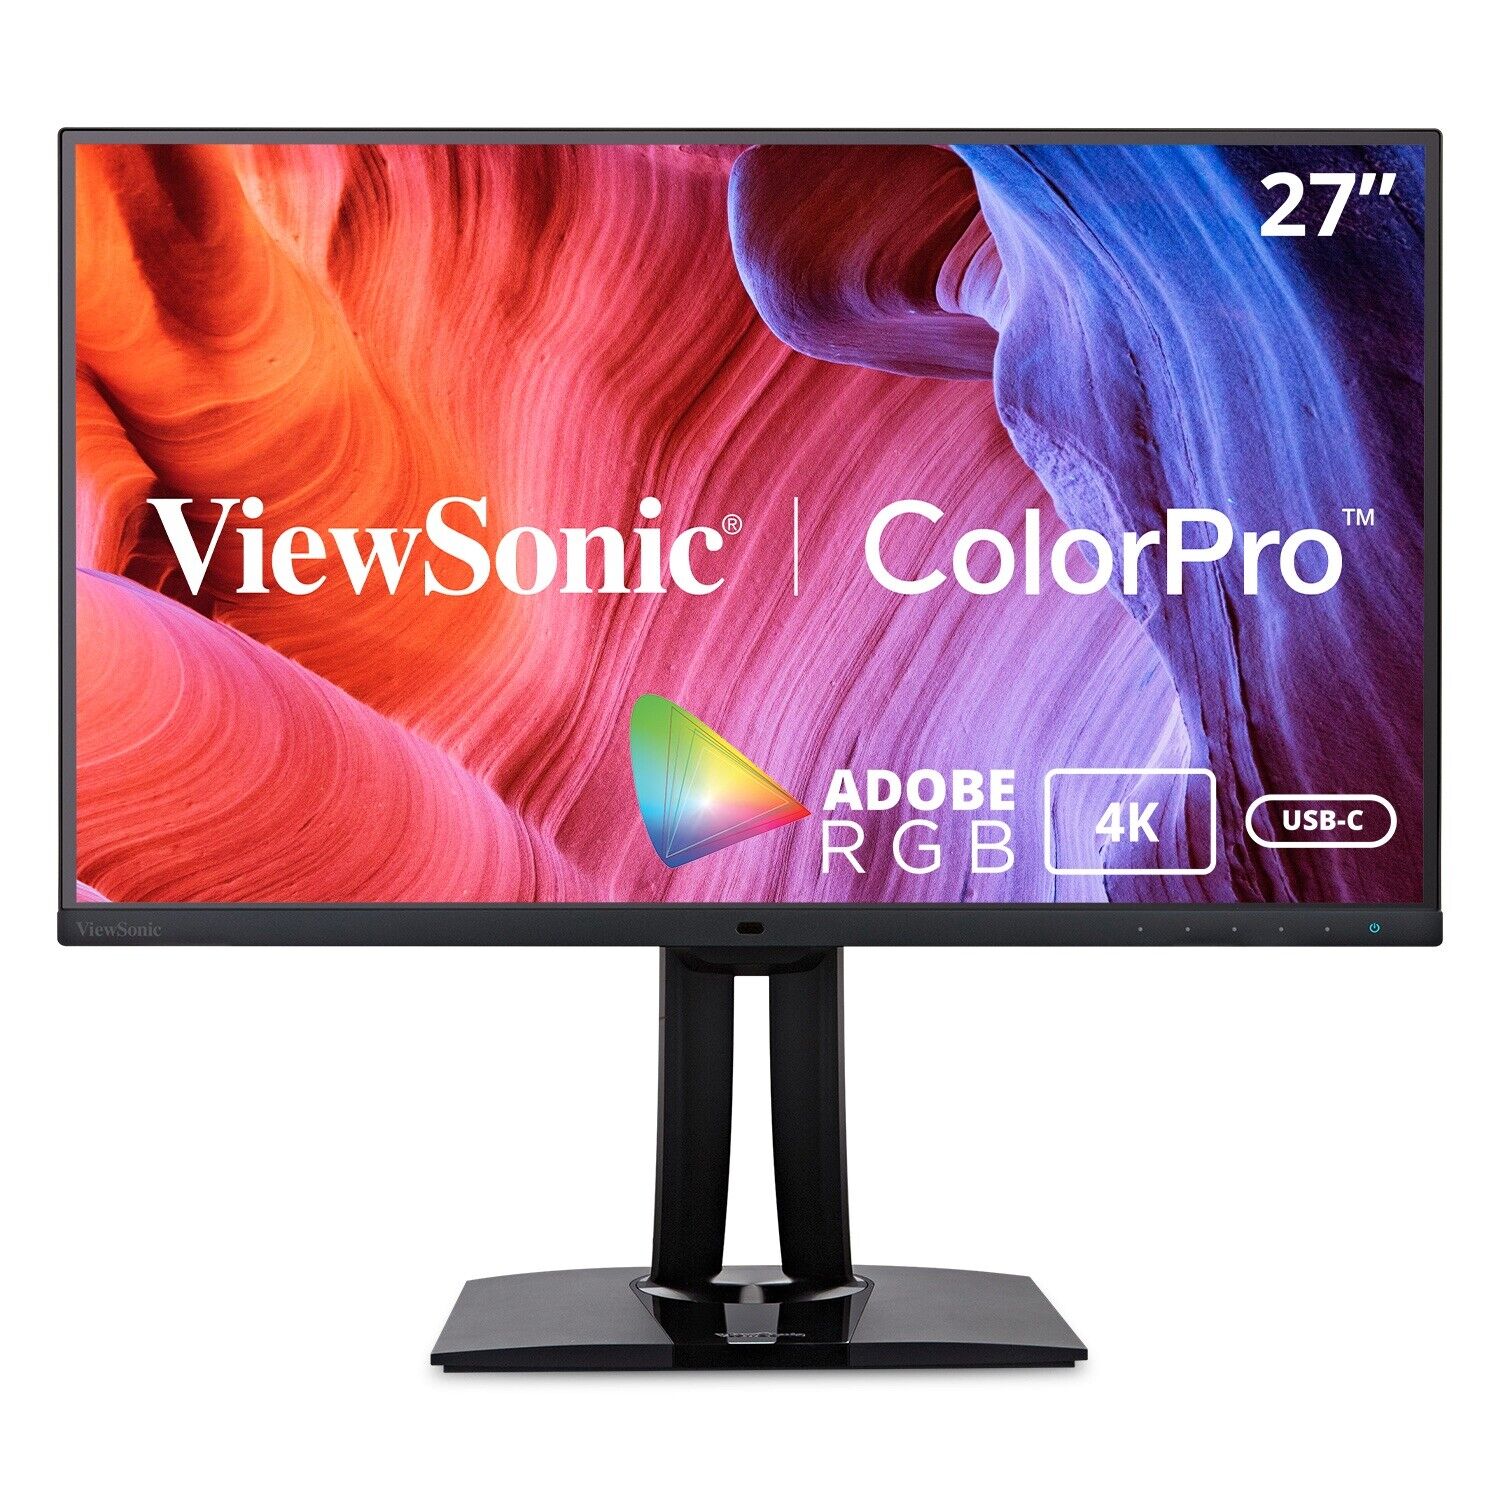 ViewSonic High Quality 4K AdobeRBG 27” Computer Monitor VP2785-4K